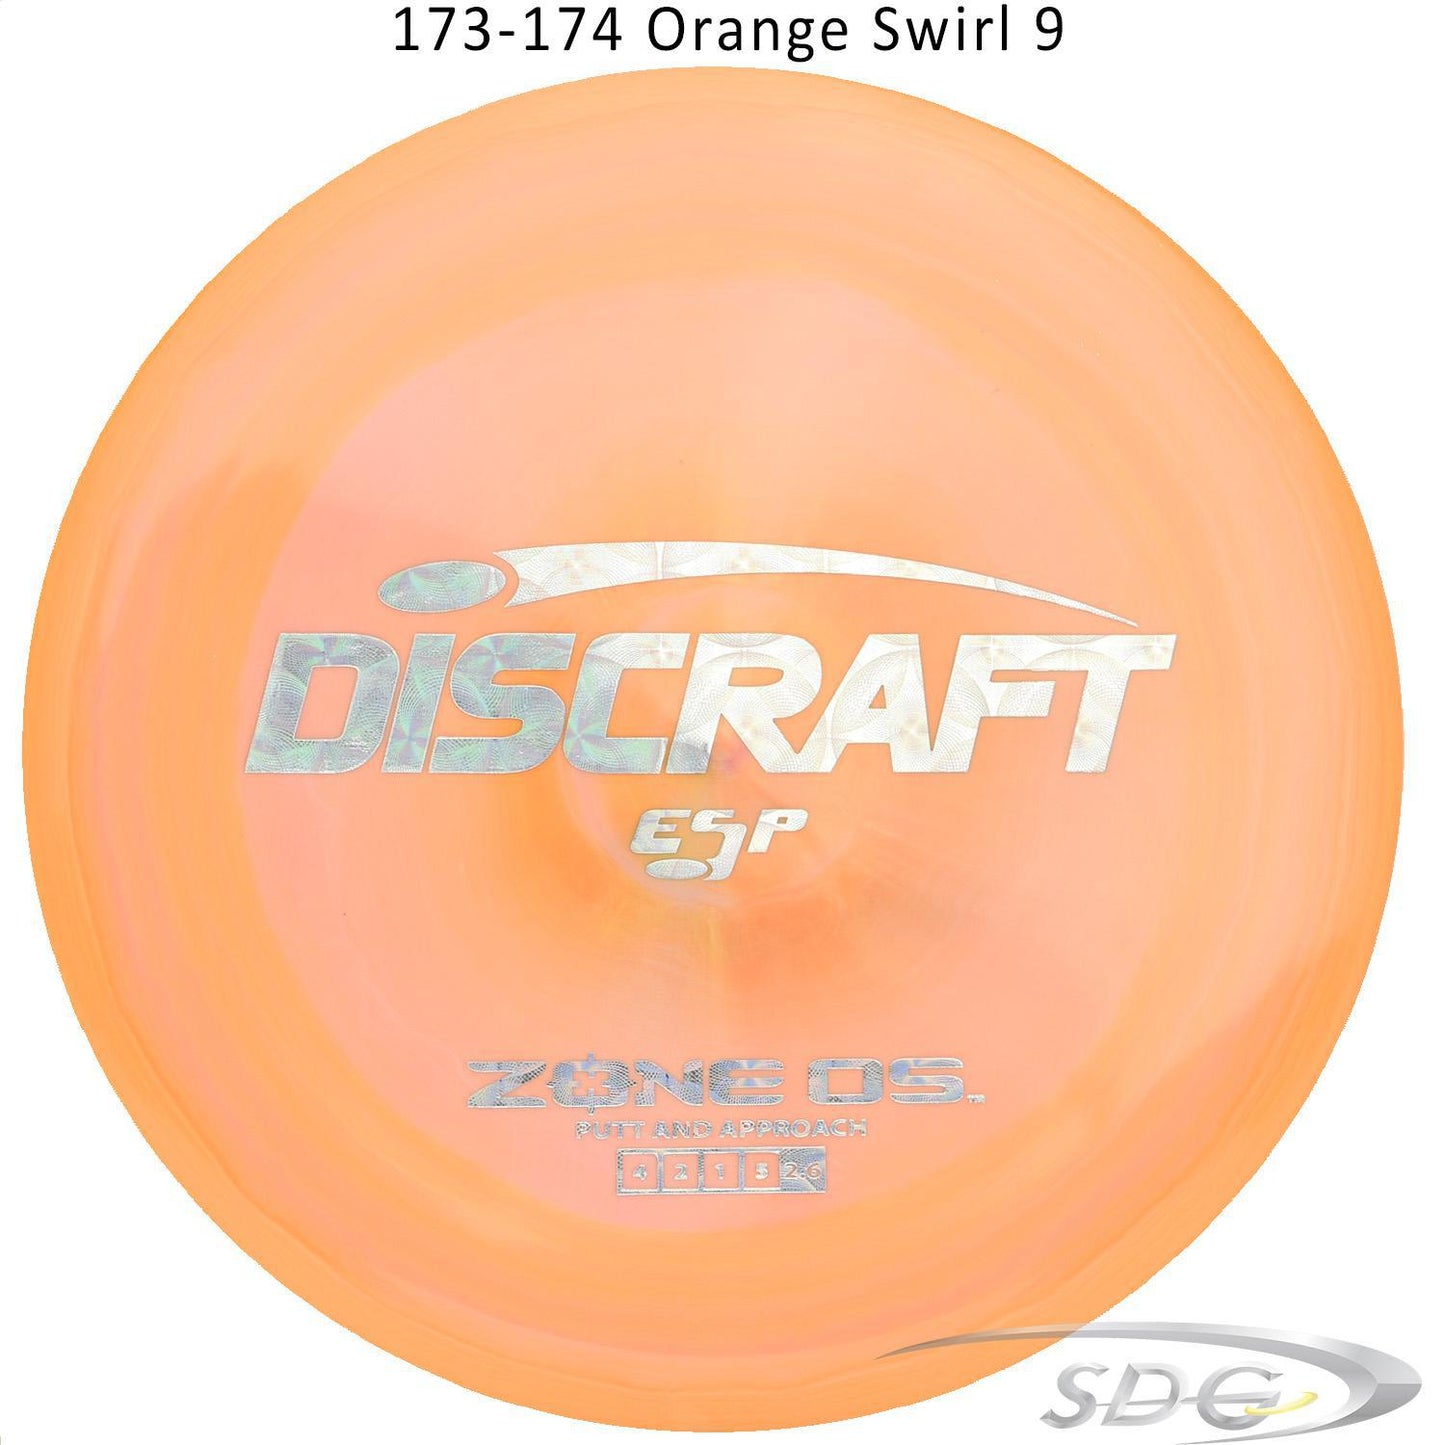 discraft-esp-zone-os-disc-golf-putter 173-174 Orange Swirl 9 